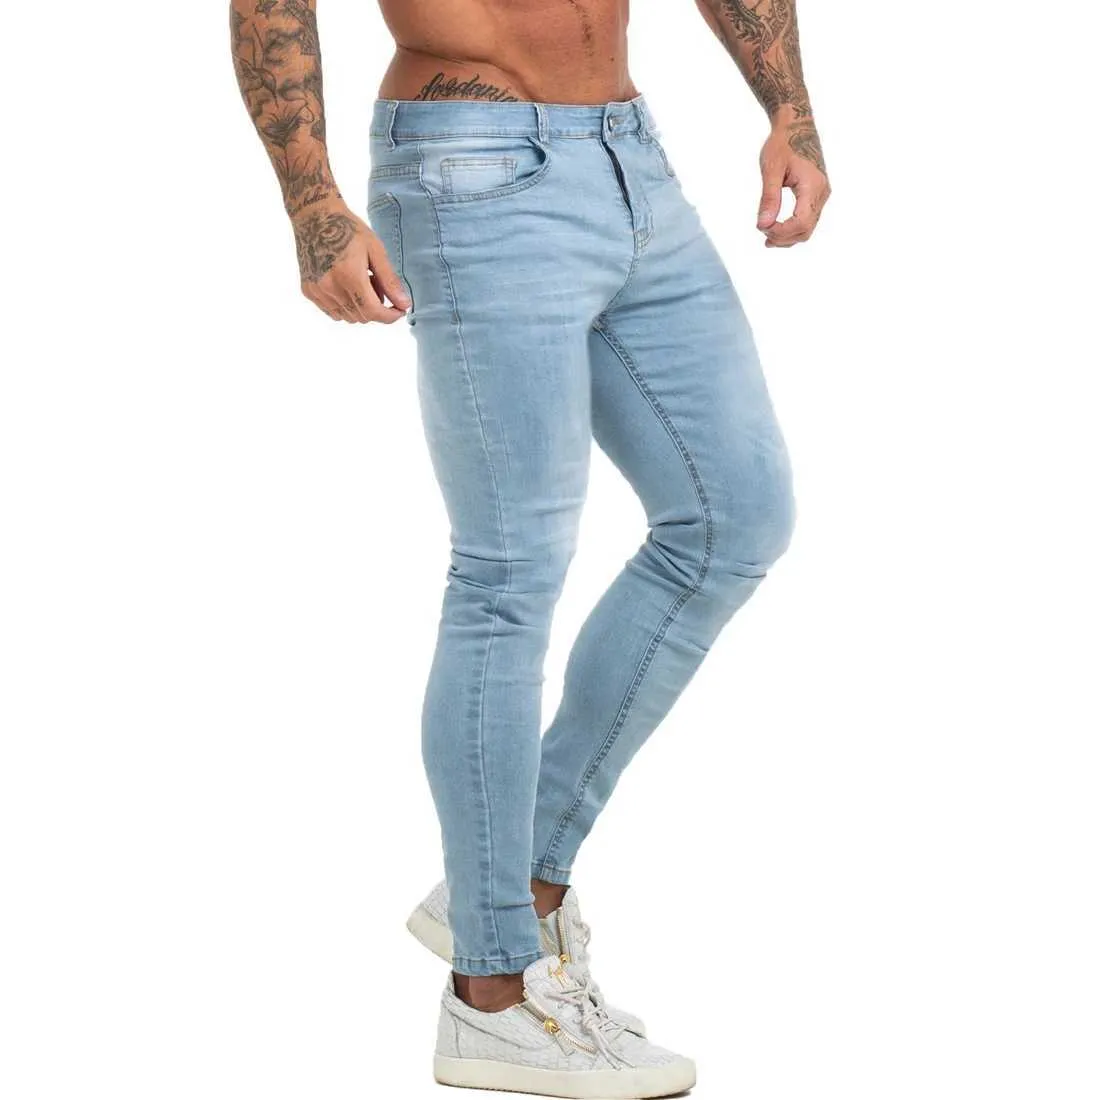 Jeans maschi maschi pantaloni da uomo pantaloni magri azzurro uomini in denim pantaloni hip hop stile hip hop più dimensioni jean maschio abbigliamento estate slim fit zm1012 t240508